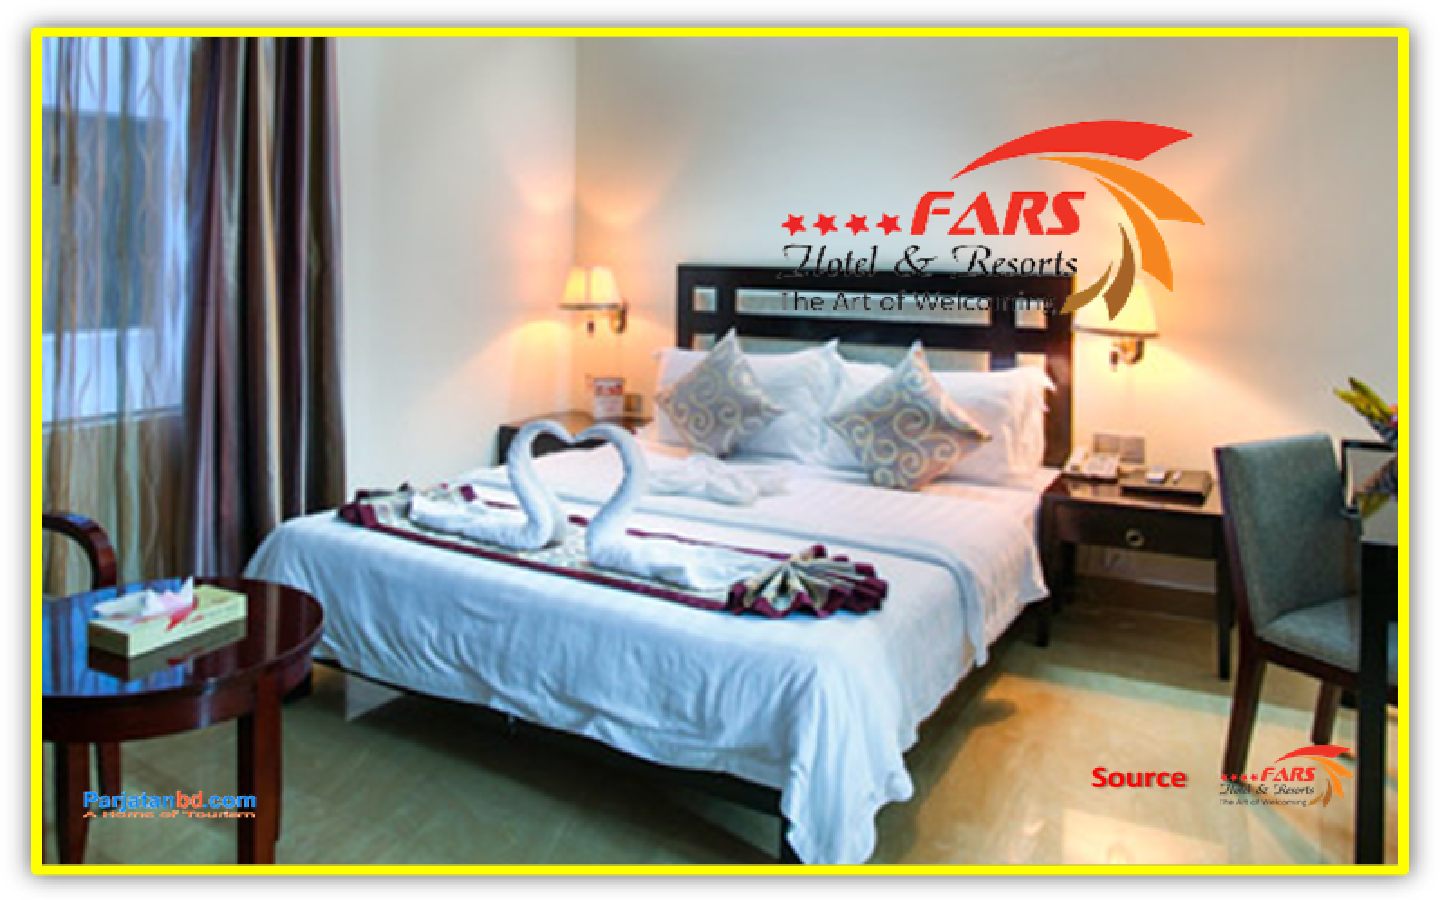 Room Deluxe King -1, FARS Hotel & Resorts, Bijonagar